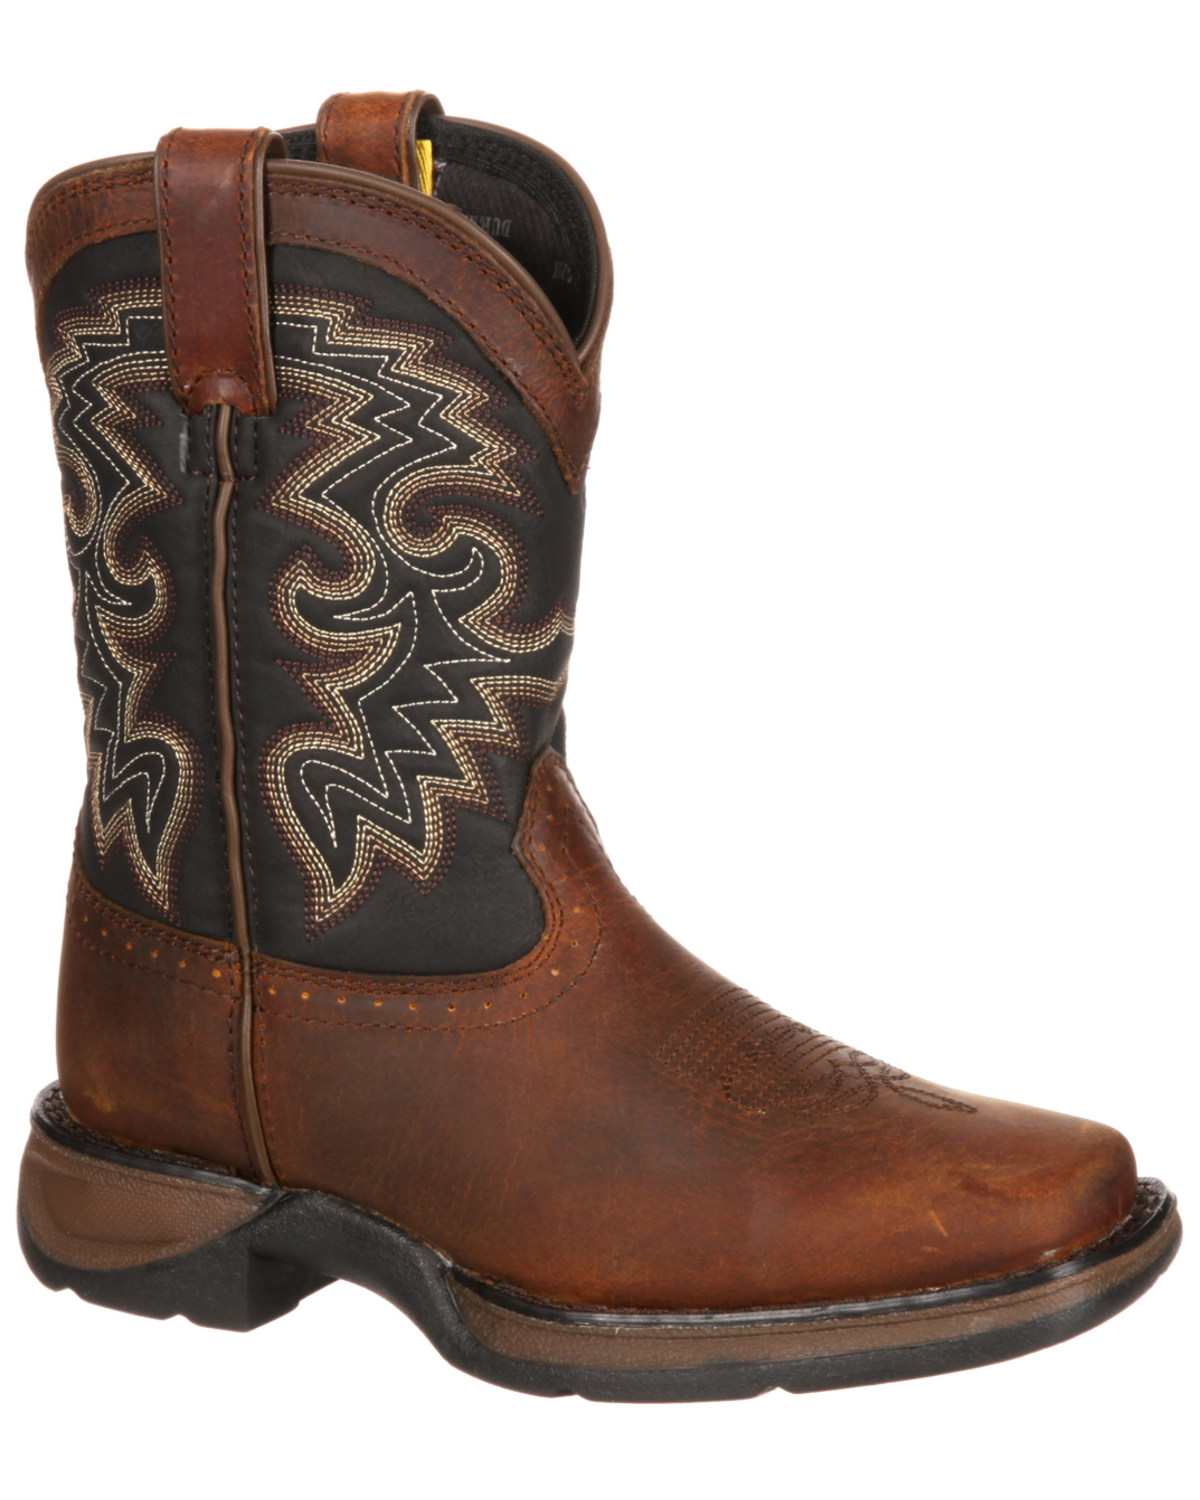 Durango Boys' Western Boots - Square Toe